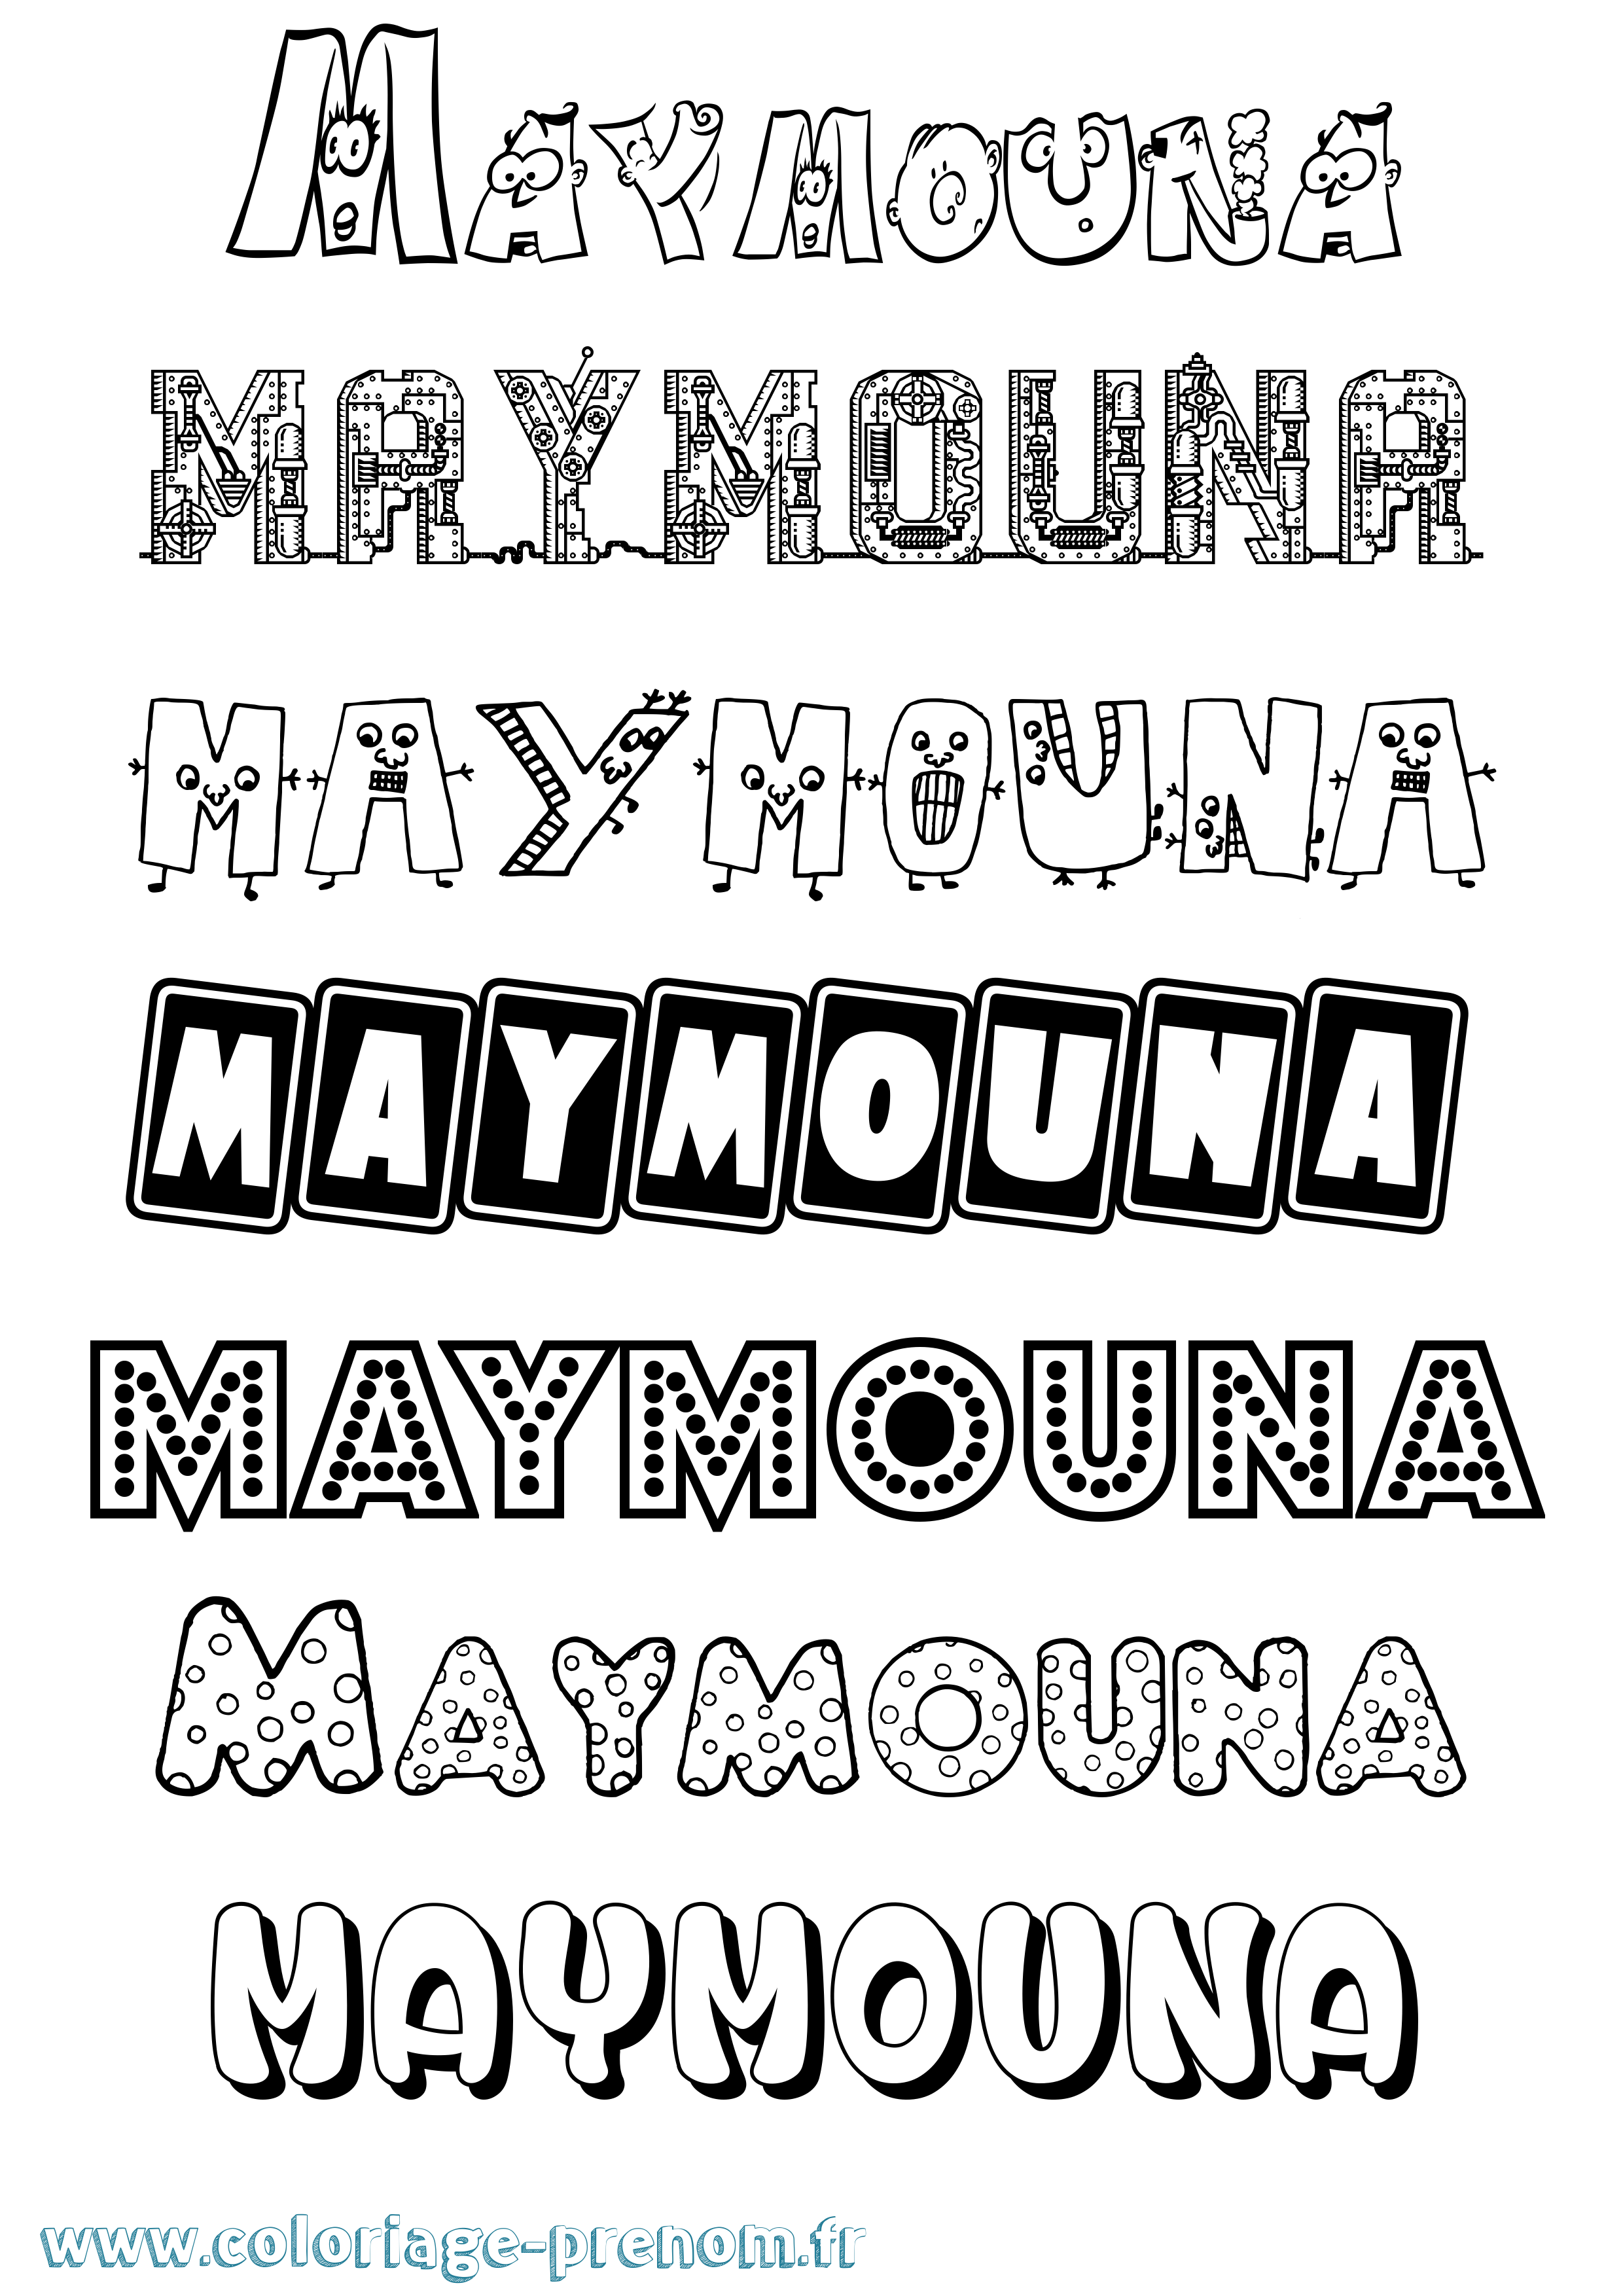 Coloriage prénom Maymouna Fun